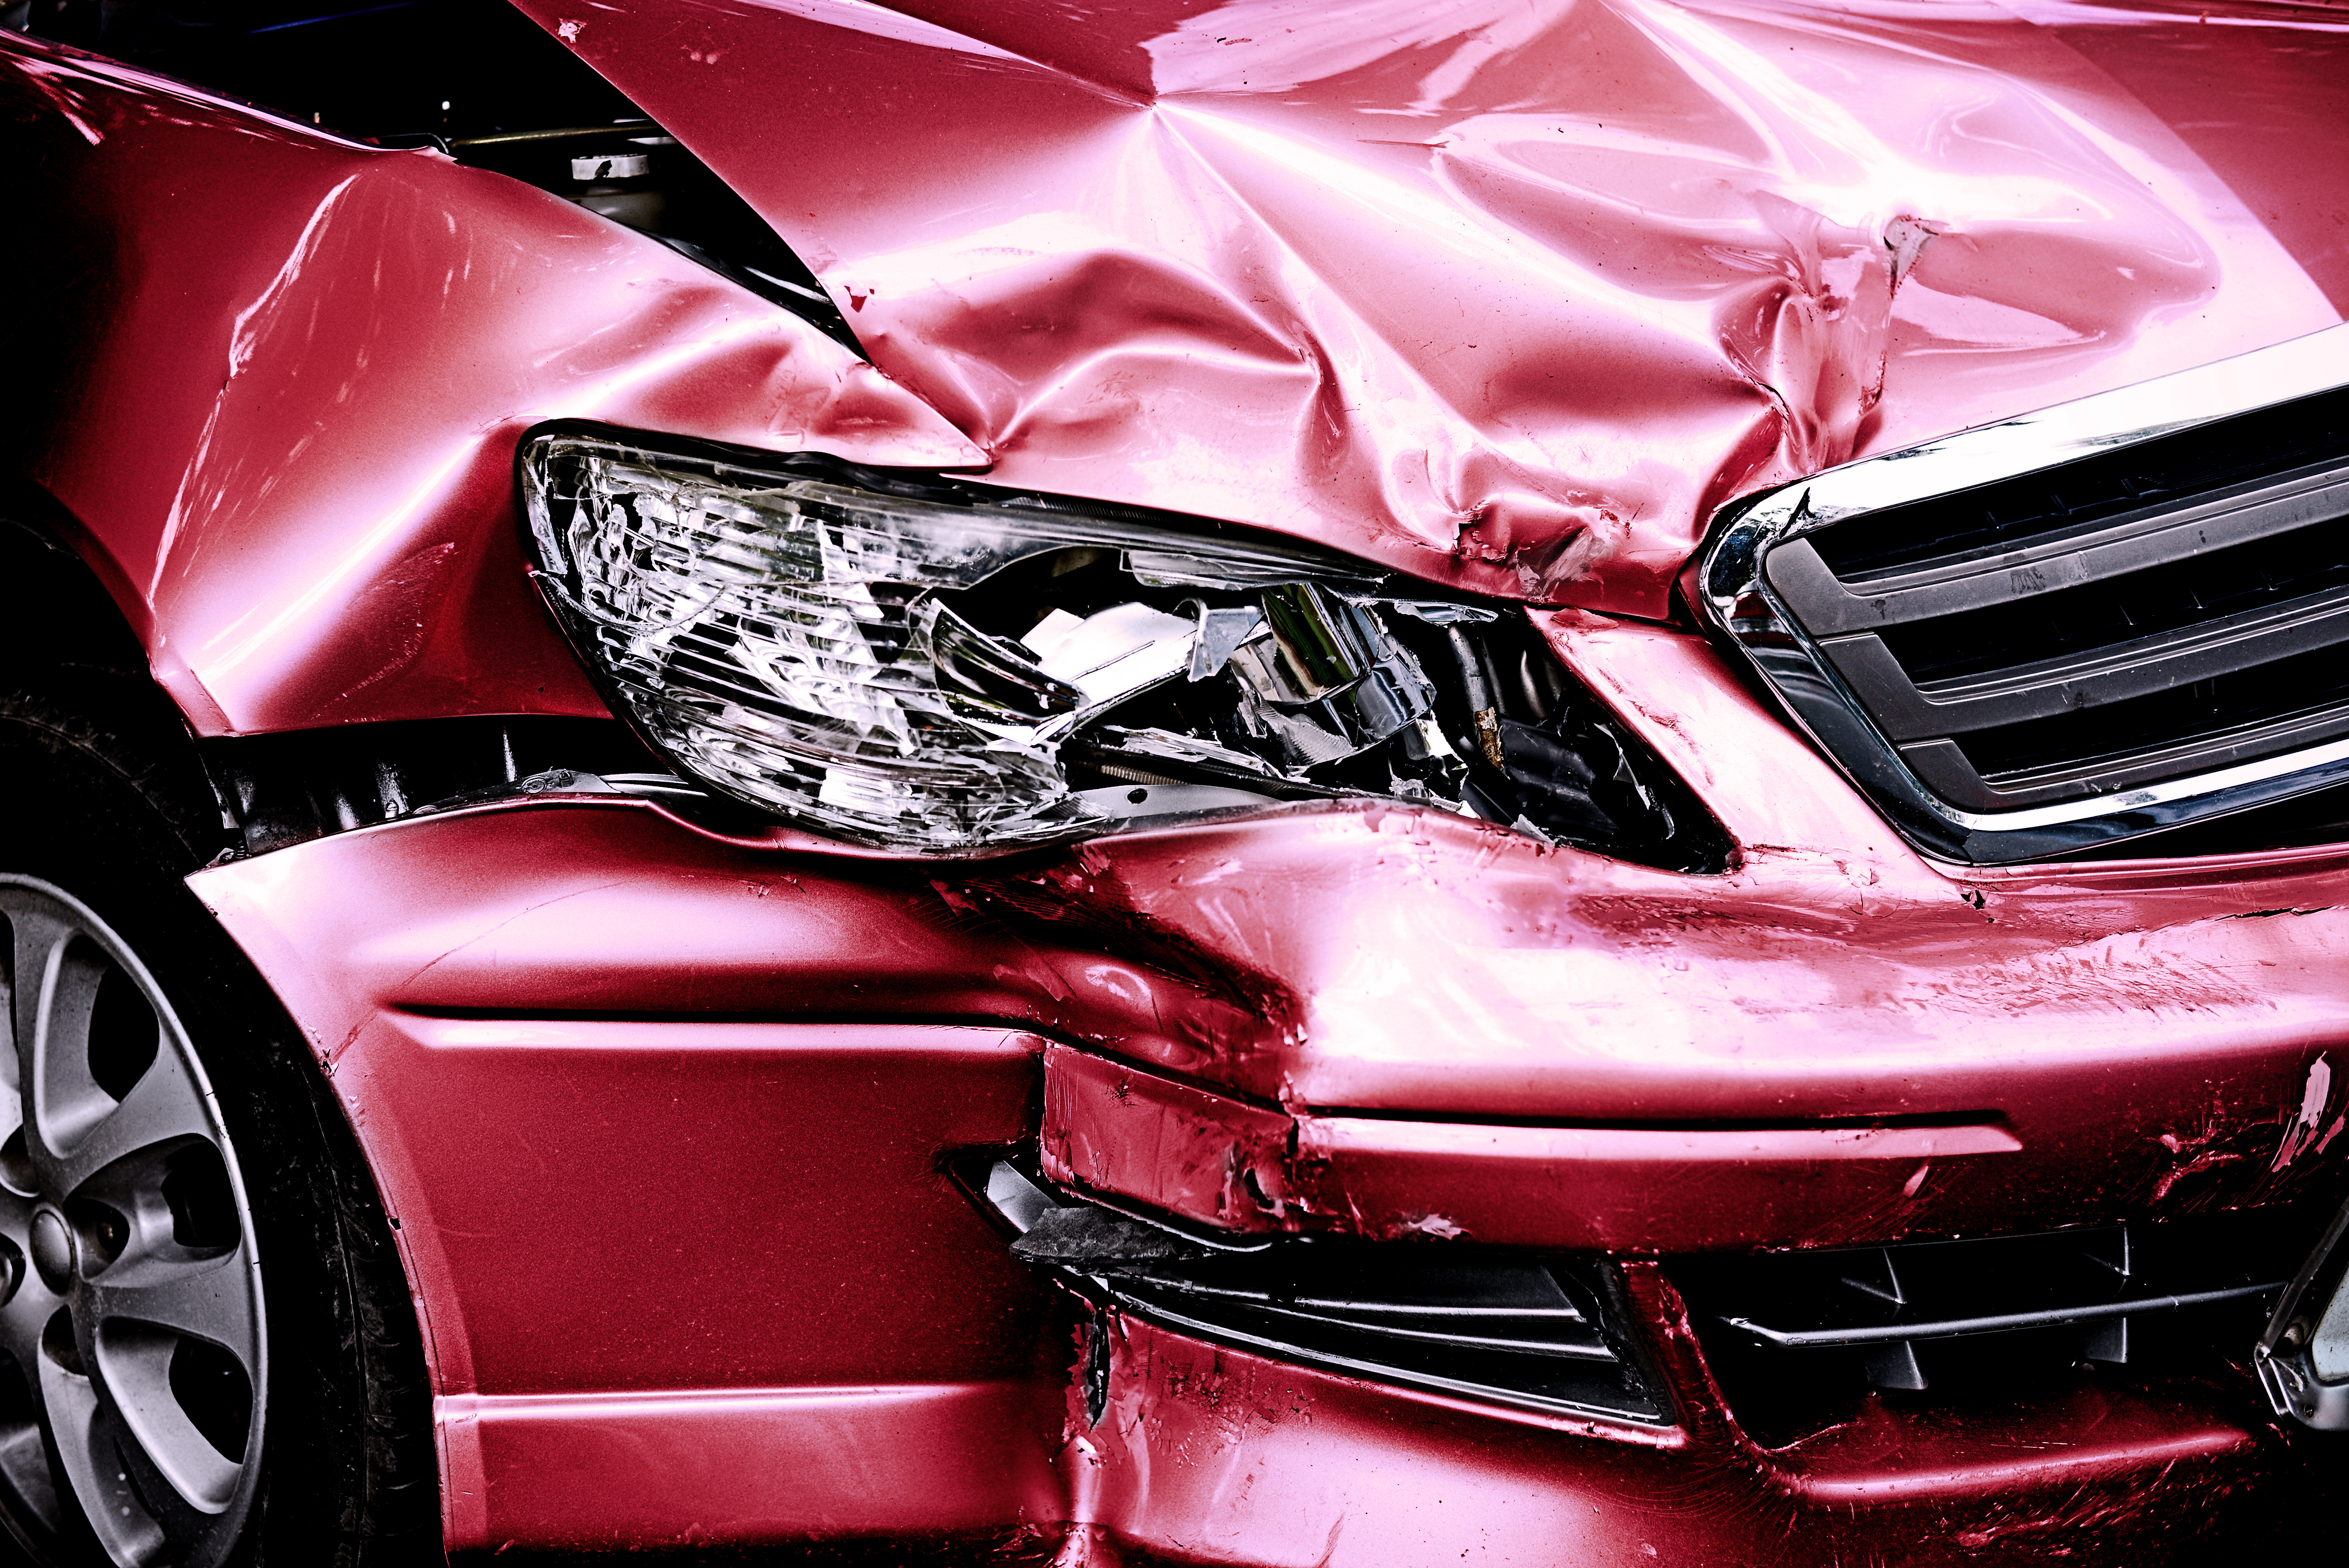 Automóvil rojo después de chocar | Fuente: Shutterstock.com